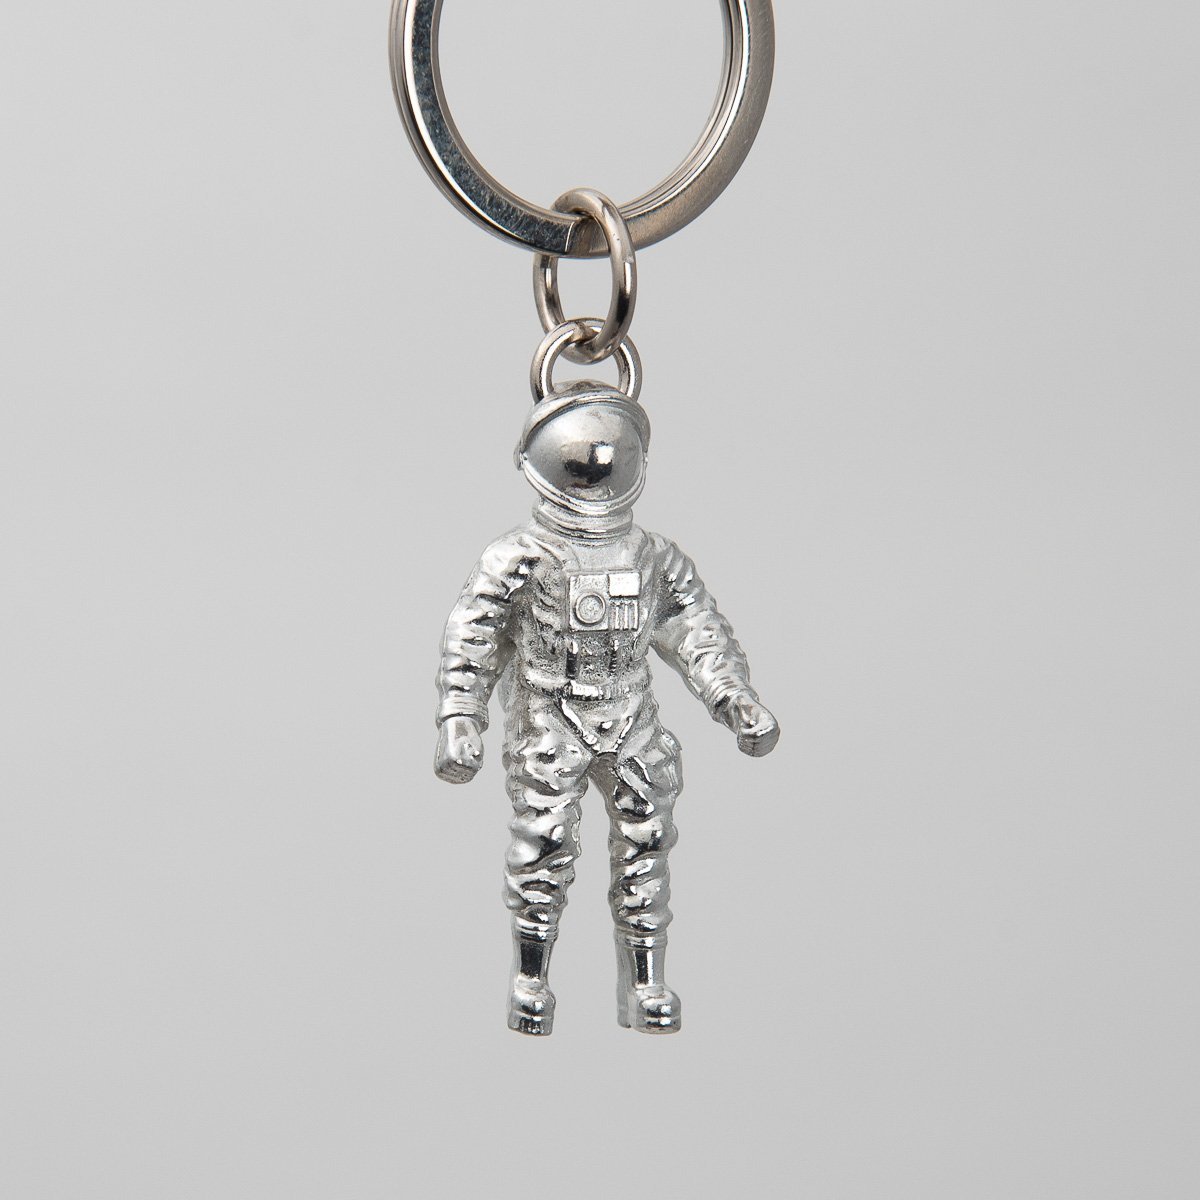 Pewter Key Ring - Astronaut